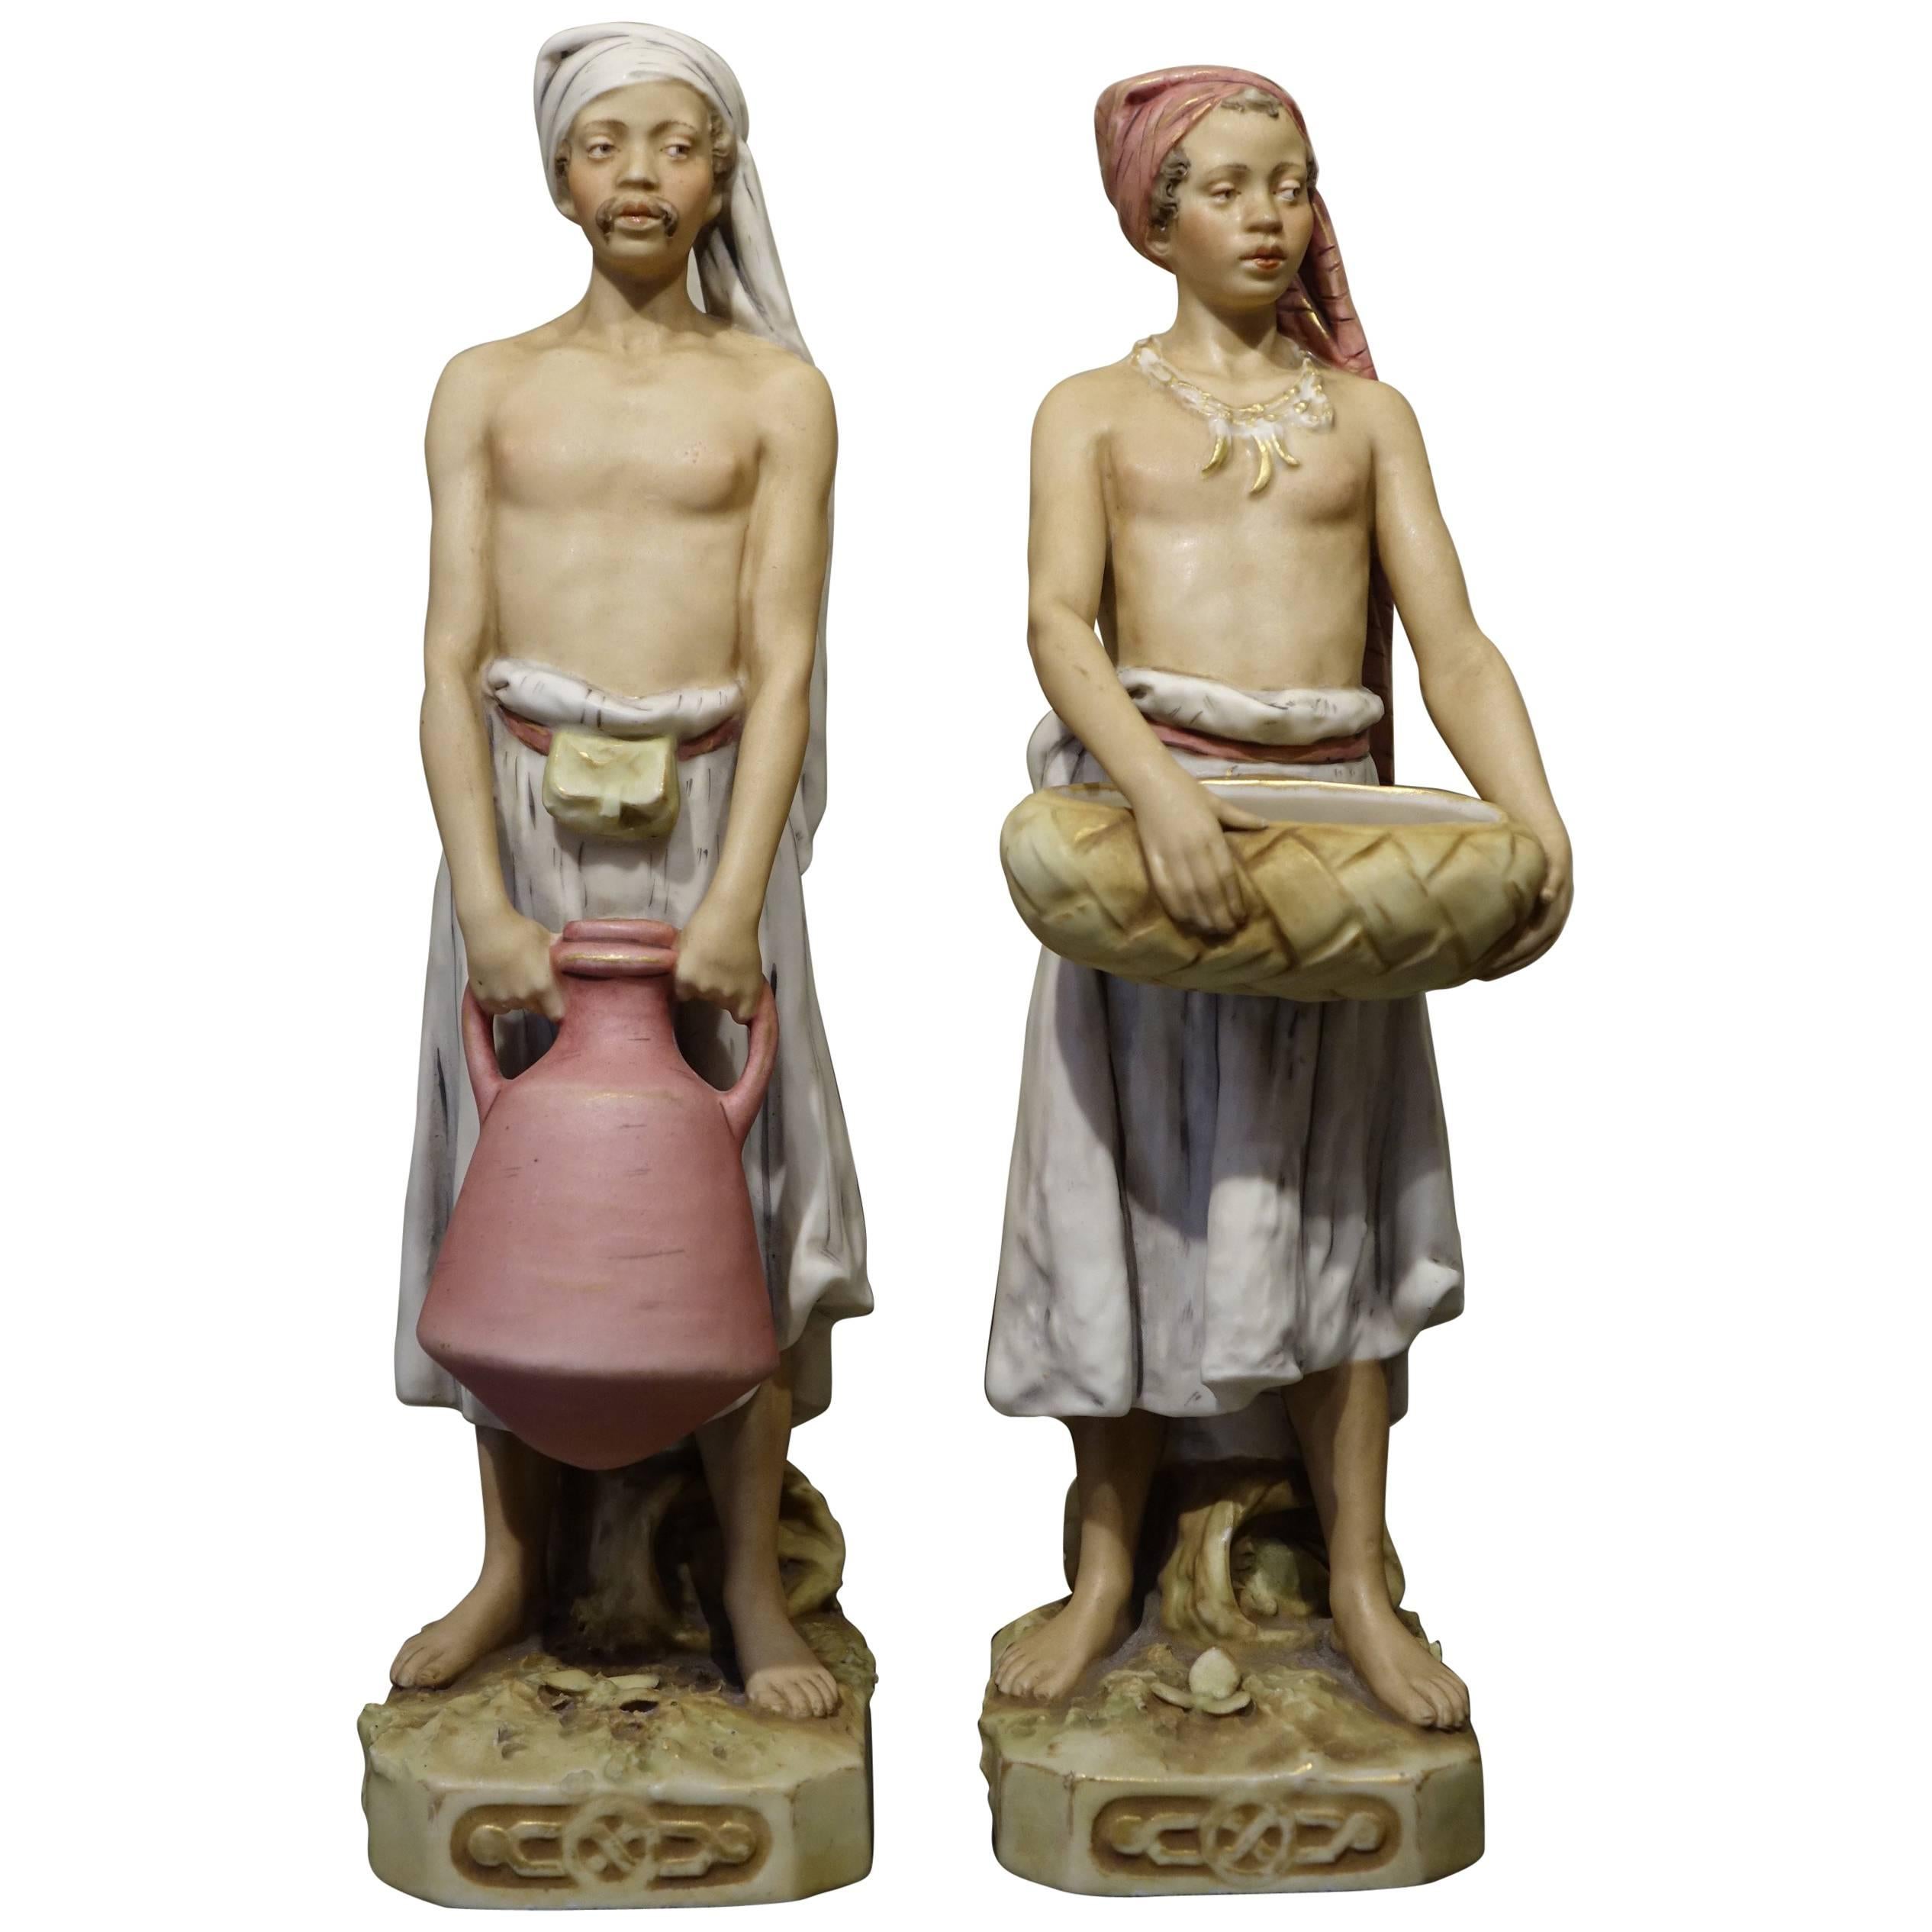 Pair of Royal Dux Bisque Porcelain with Oriental Figures, circa 1900-1910